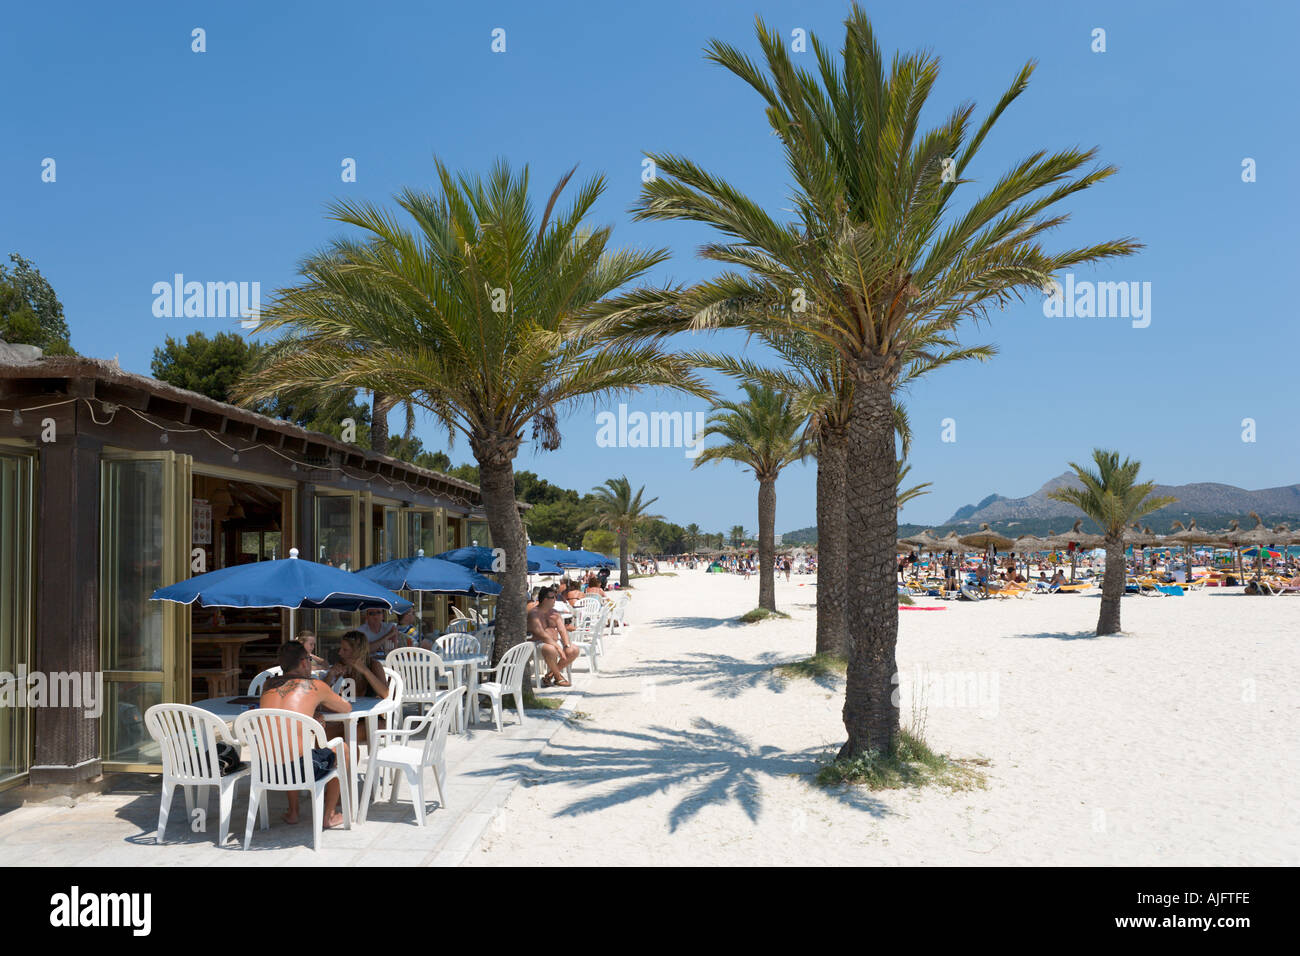 Bar de plage, Puerto de Alcudia, Mallorca, Espagne Banque D'Images